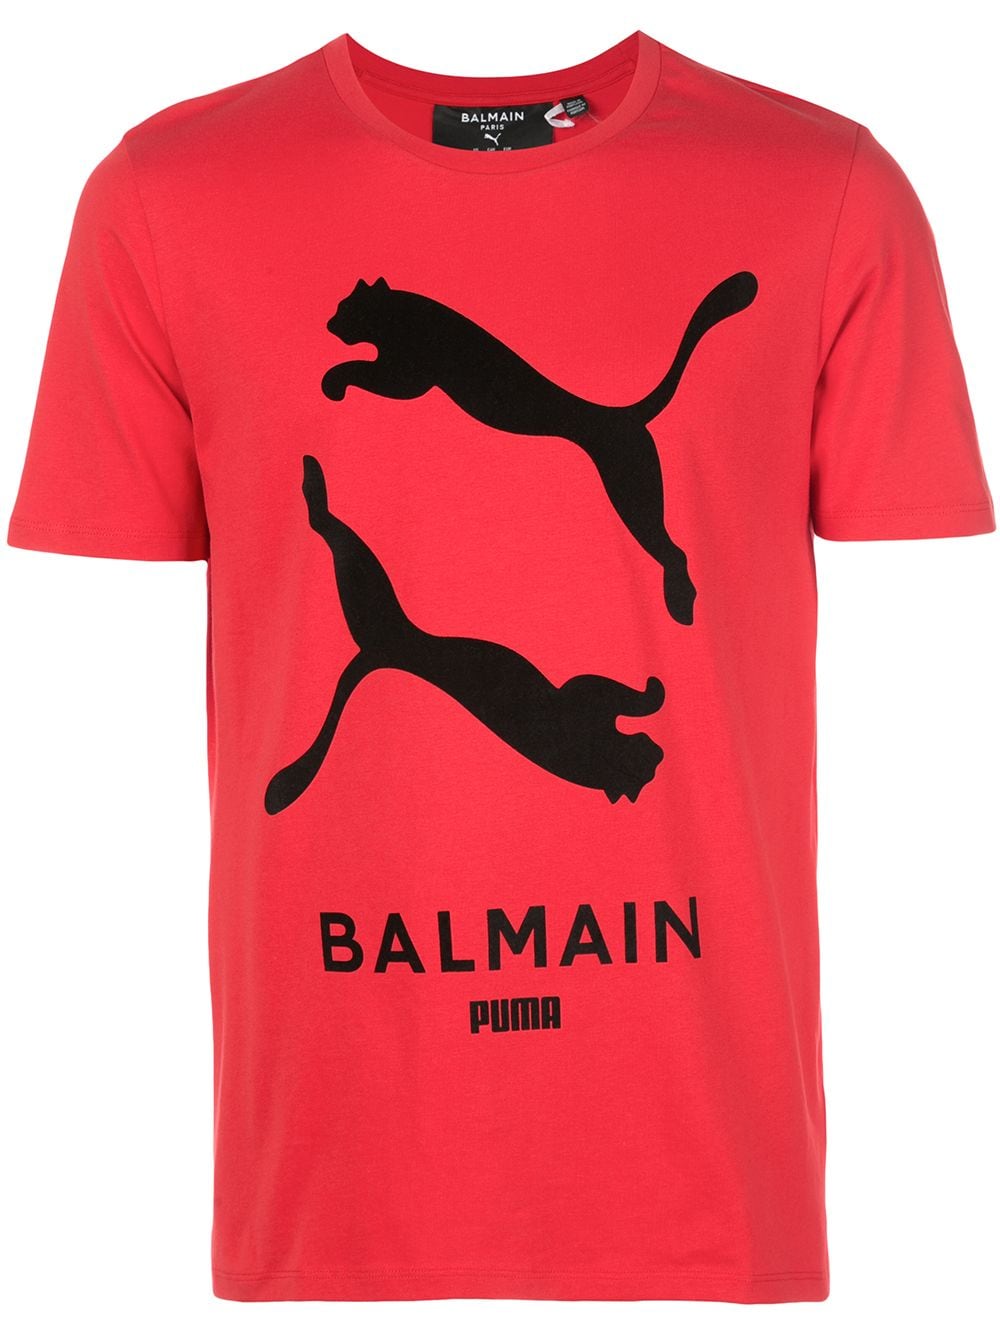 Puma X Balmain Graphic T-shirt In Red